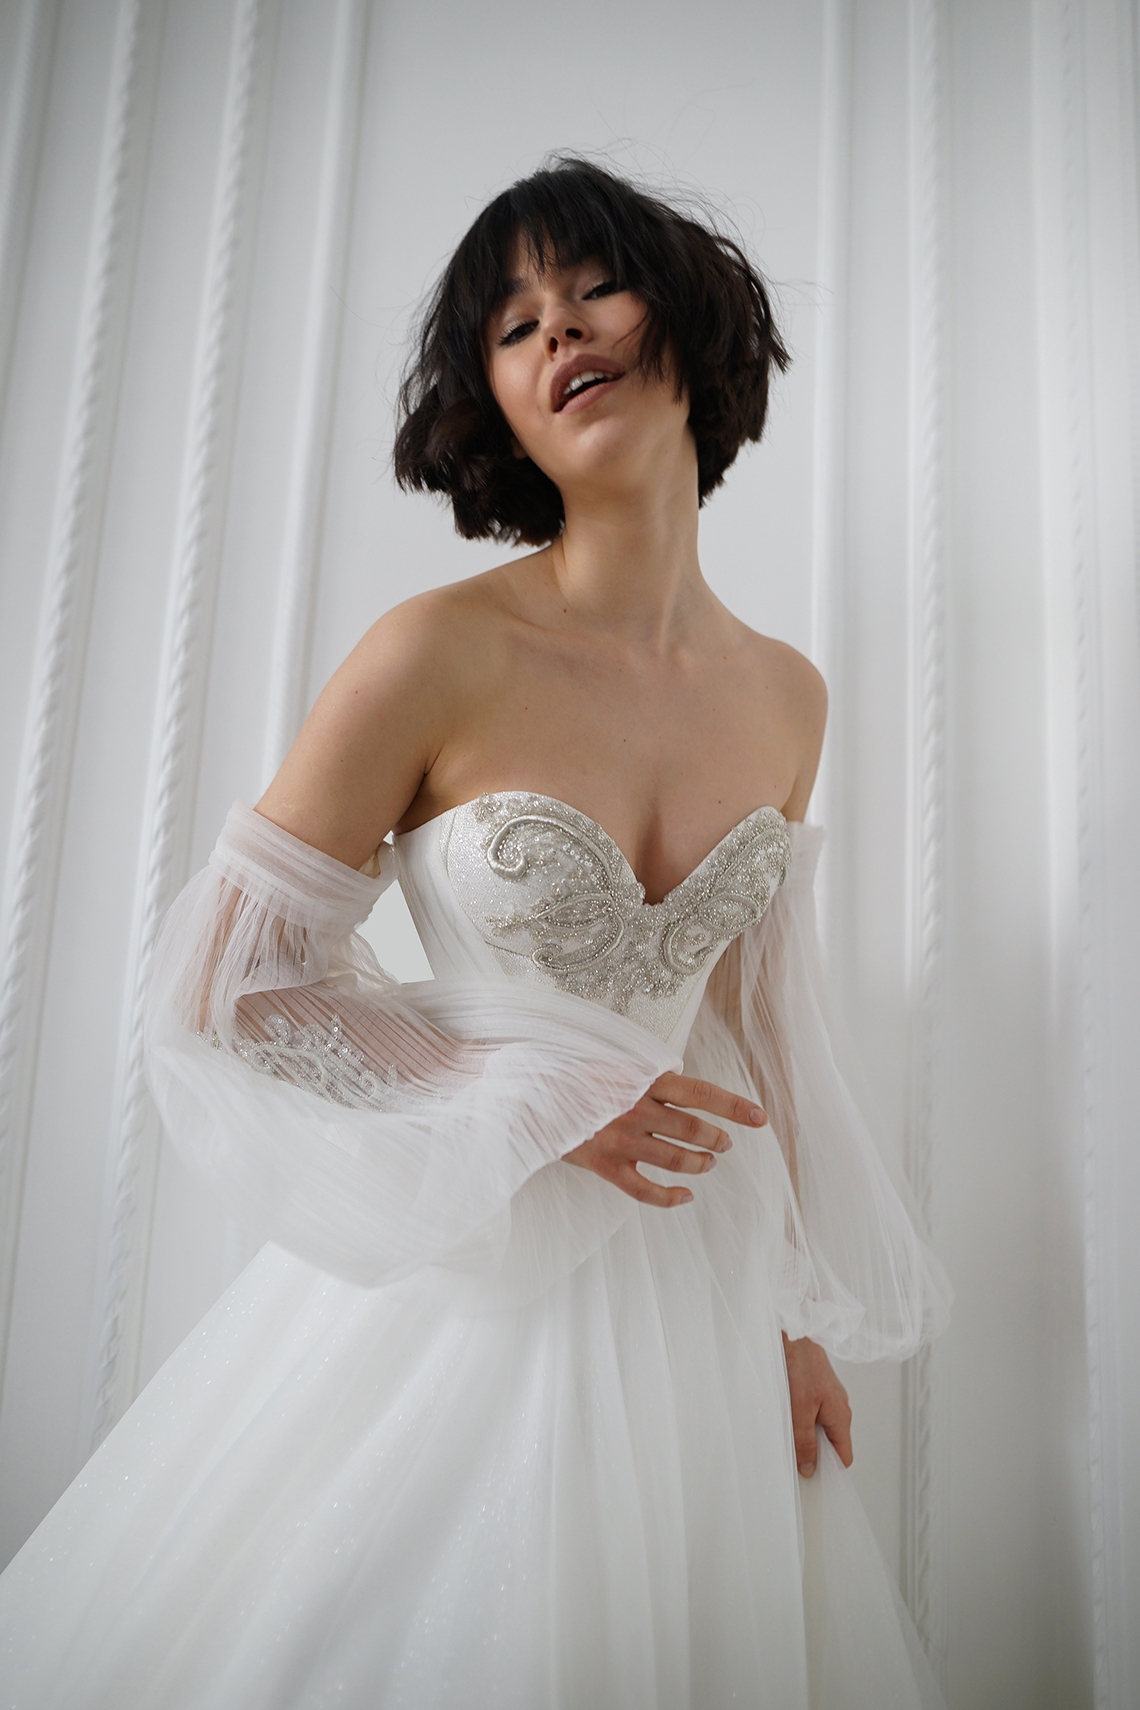 Olivia Bottega Lightweight Comfortable Romantic Wedding Dresses 2022 – Bridal Musings – Off-the-Shoulder Wedding Dress Hope with Puffy Sleeves – 9